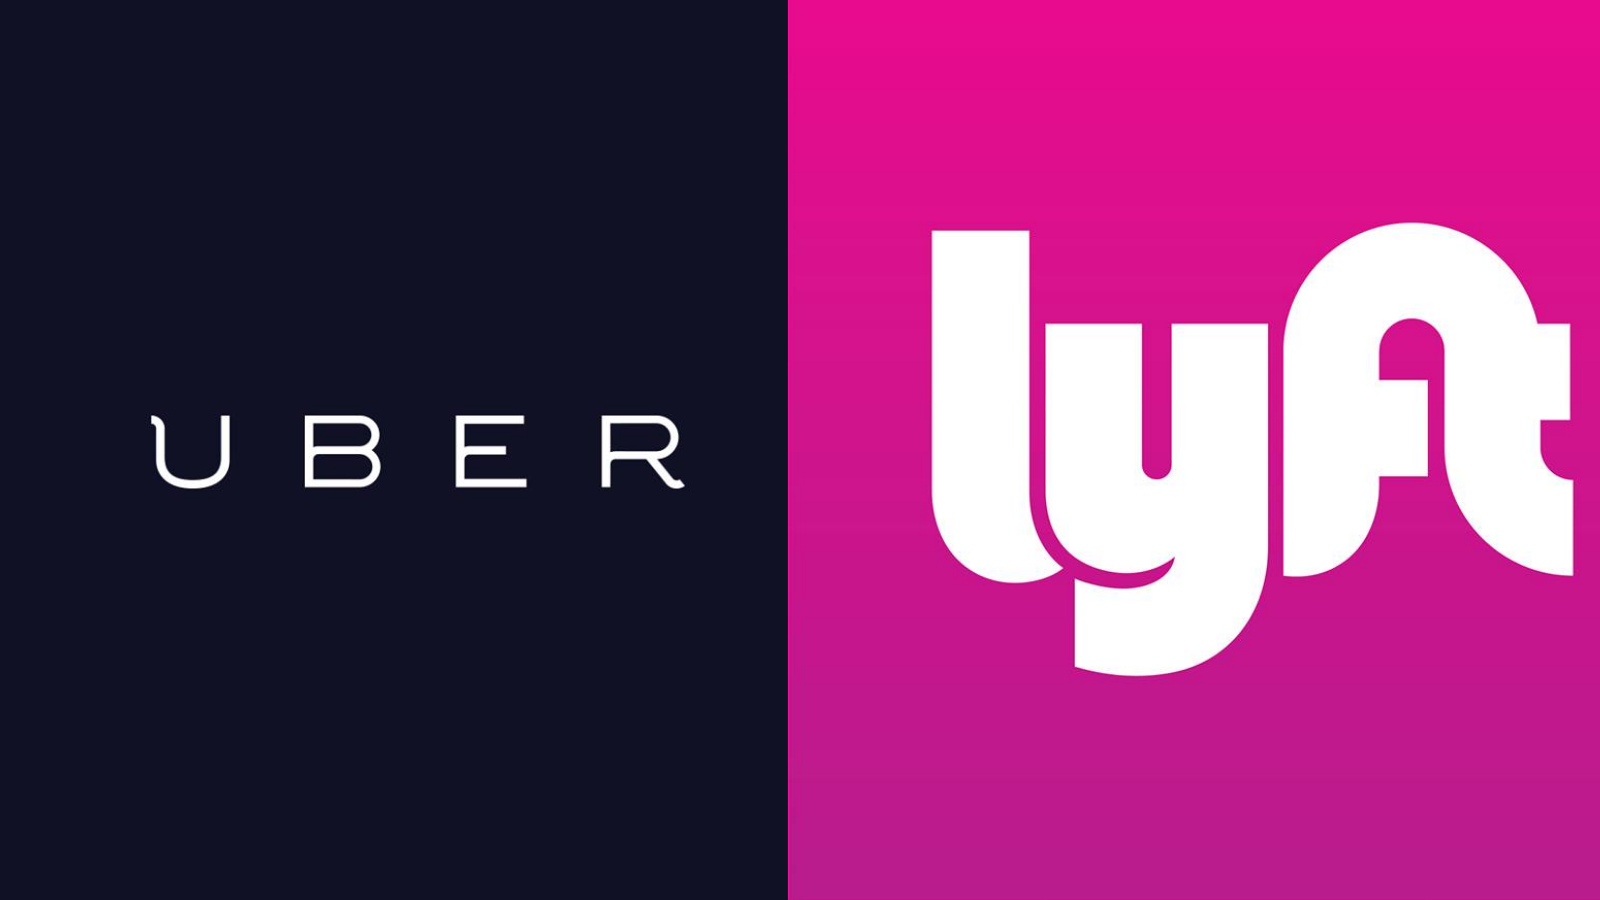 Uber and lyft logo